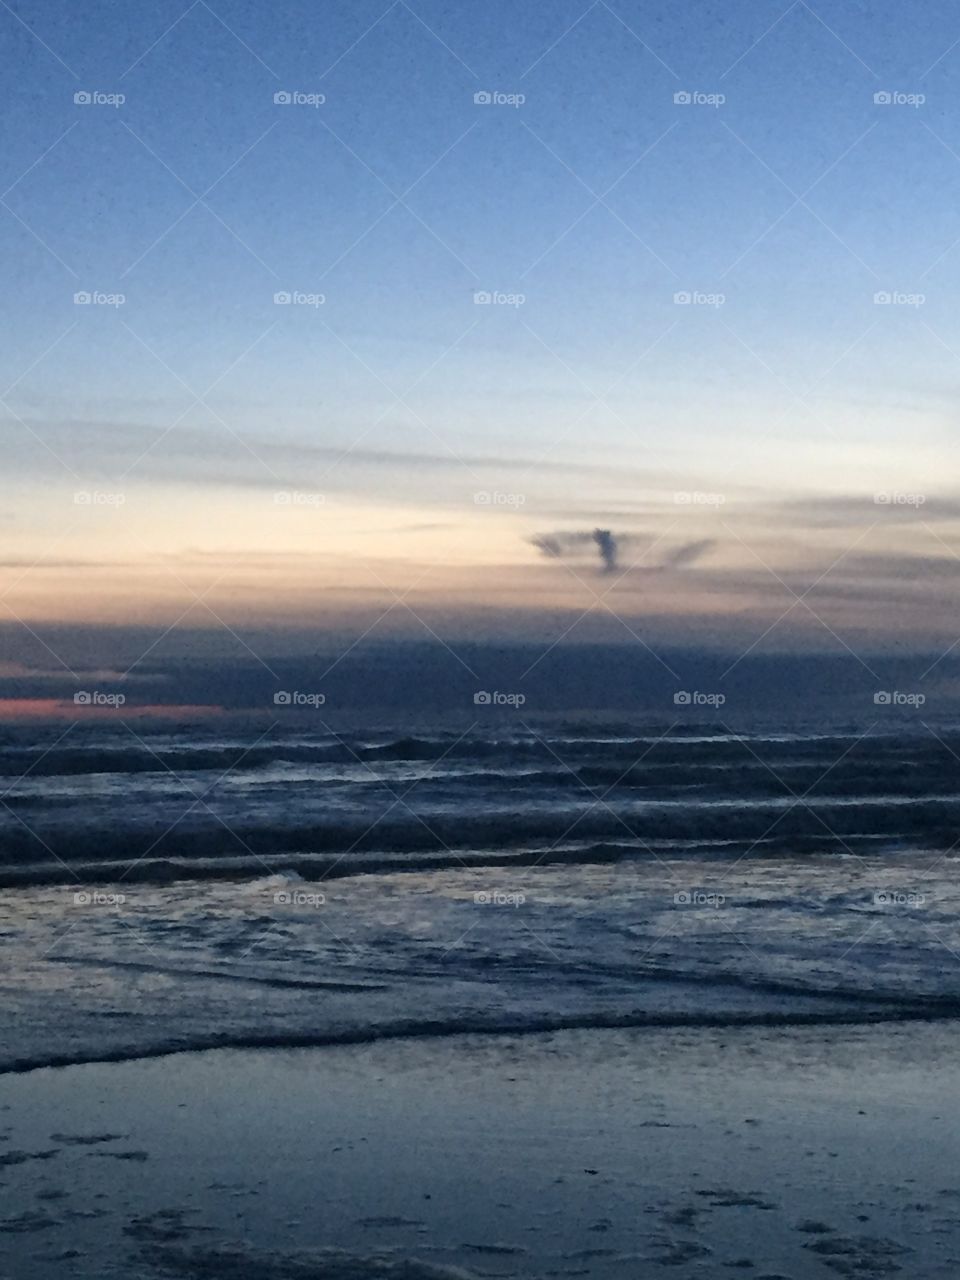 Ocean waves at sunset.